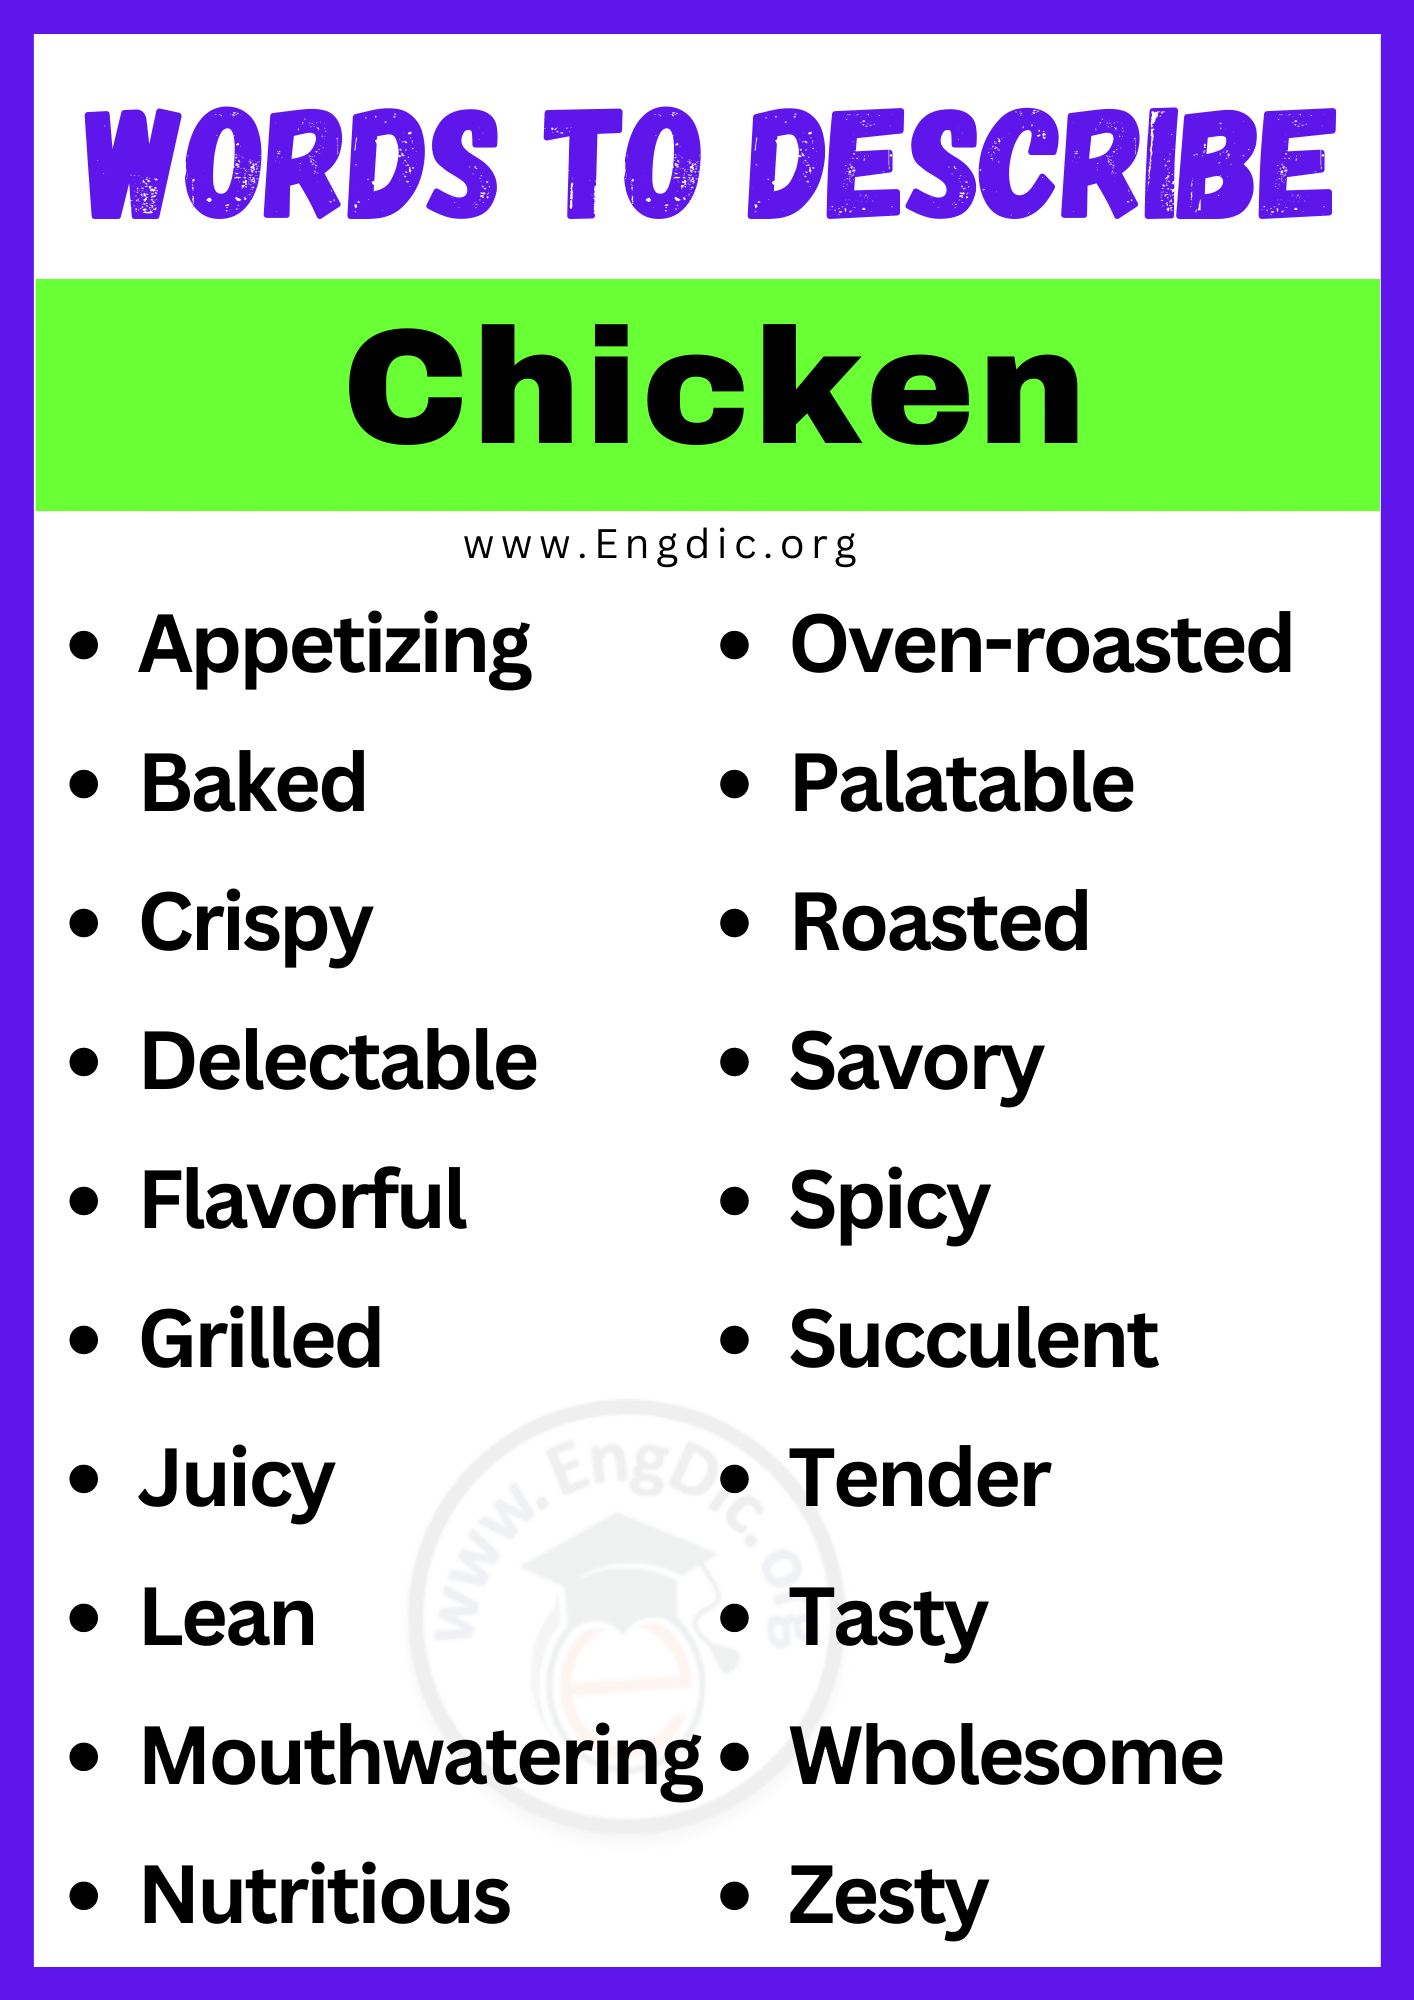 Words to Describe Chicken